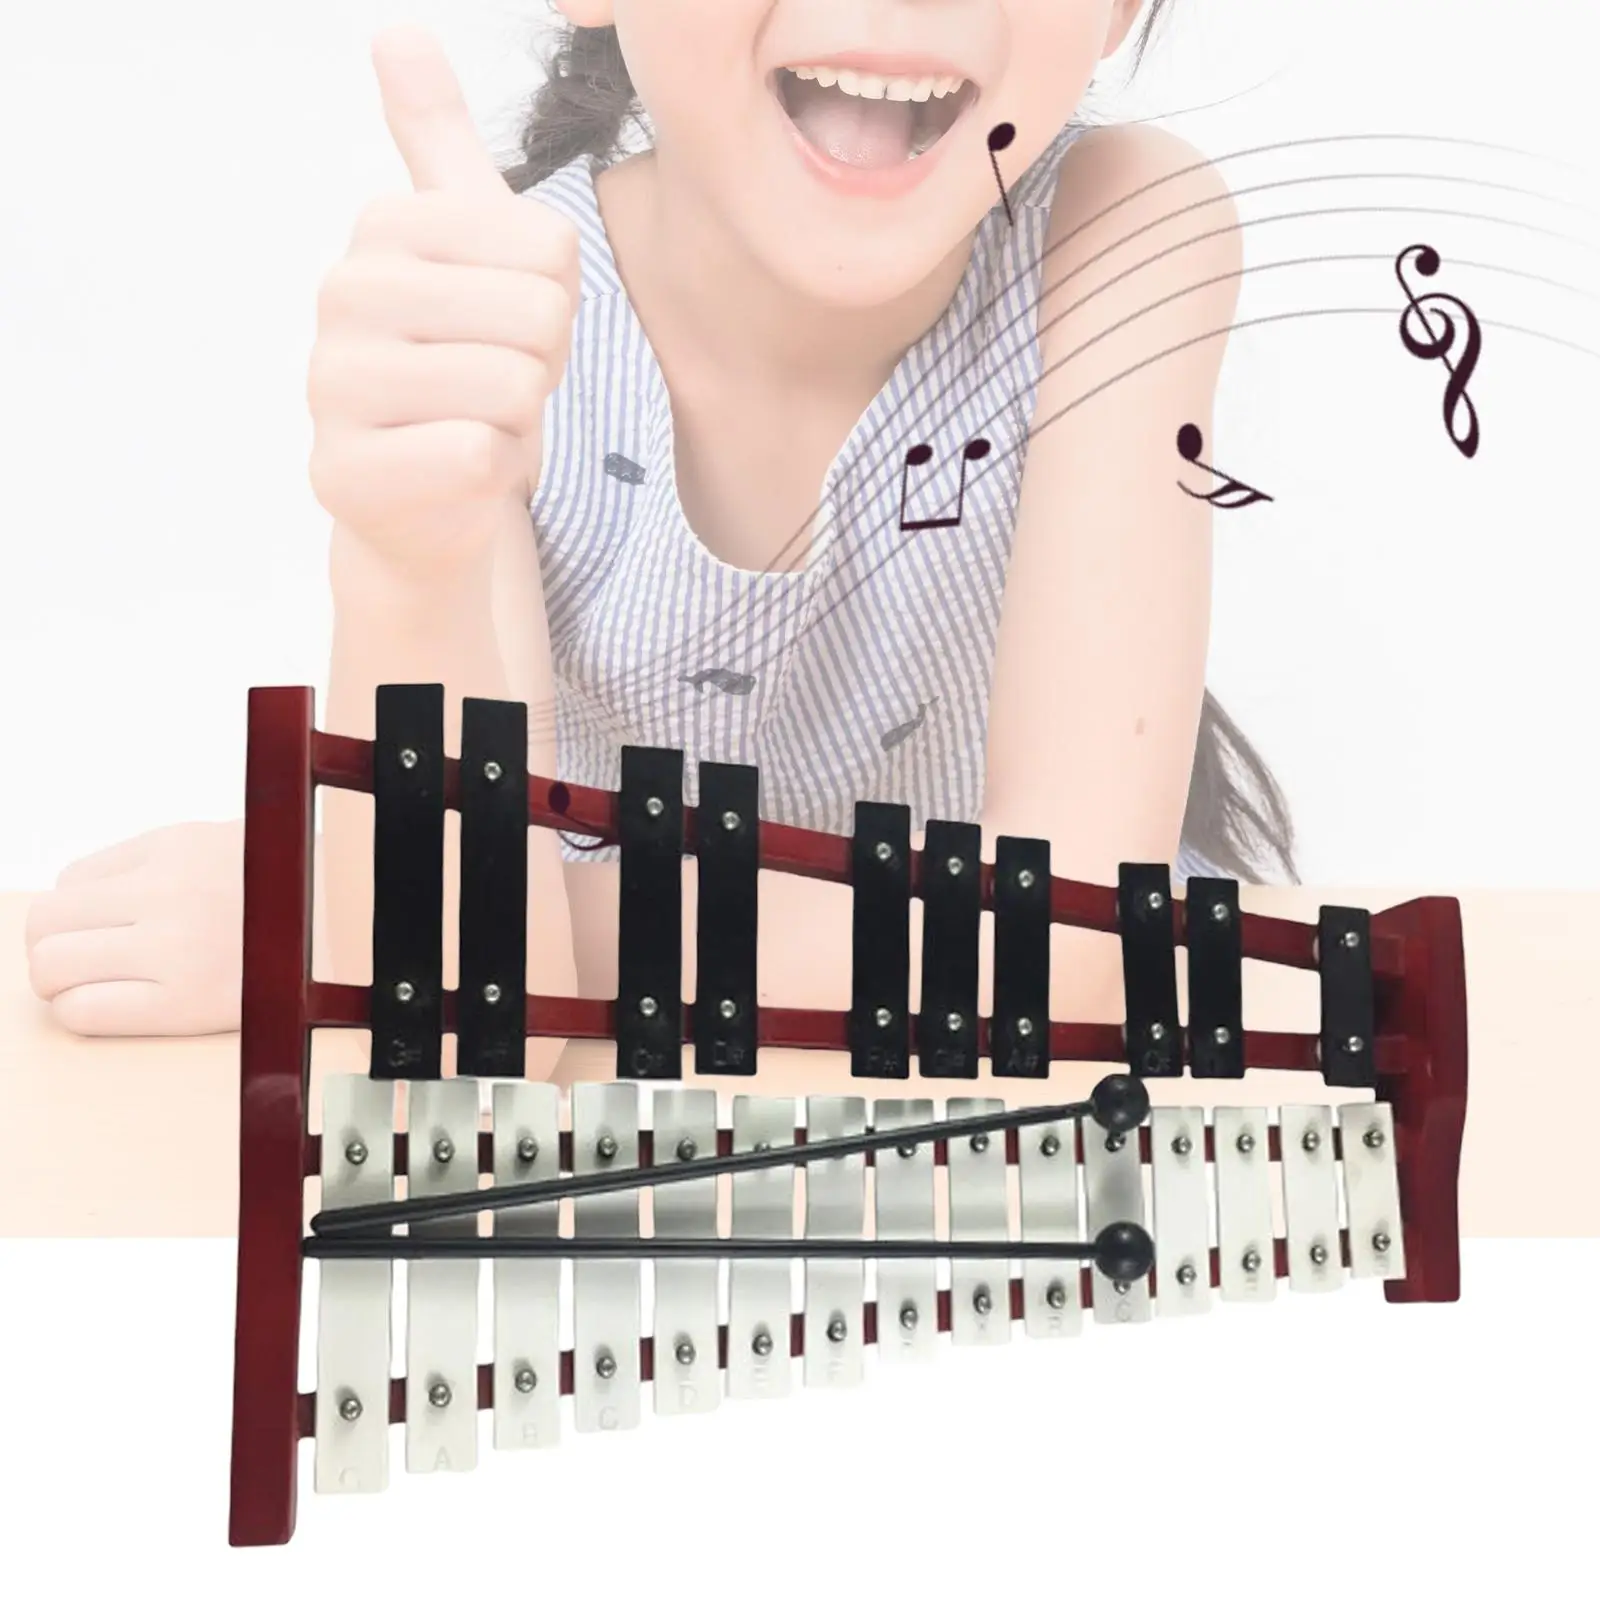 25 Note Glockenspiel Xylophone Musical Instrument Exquisite Craftsmanship